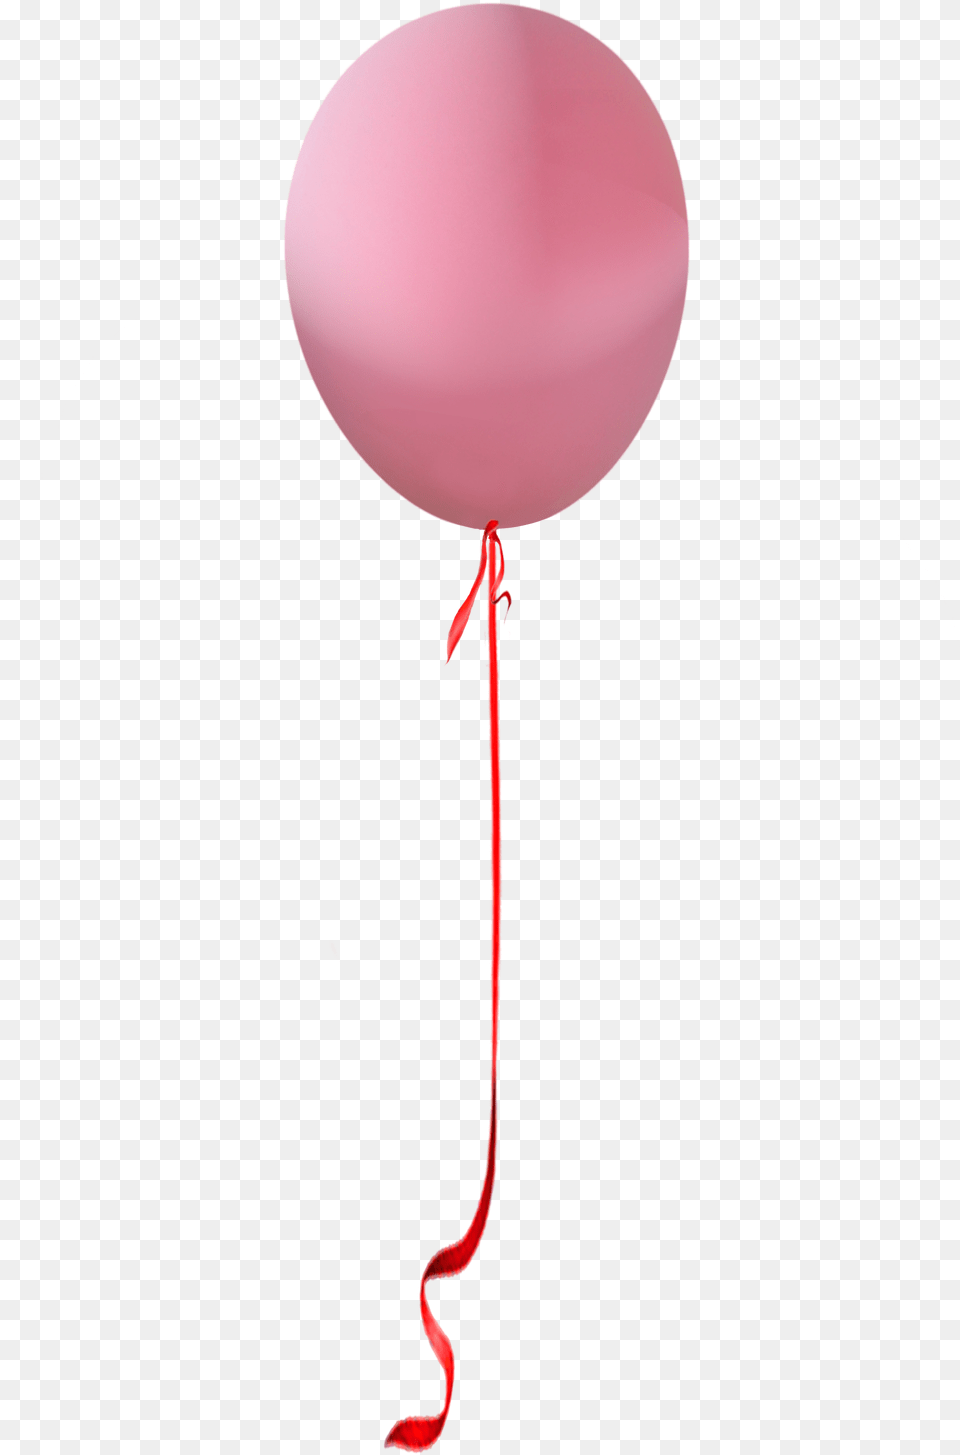 Download Hd Balloon String Balloon Png Image